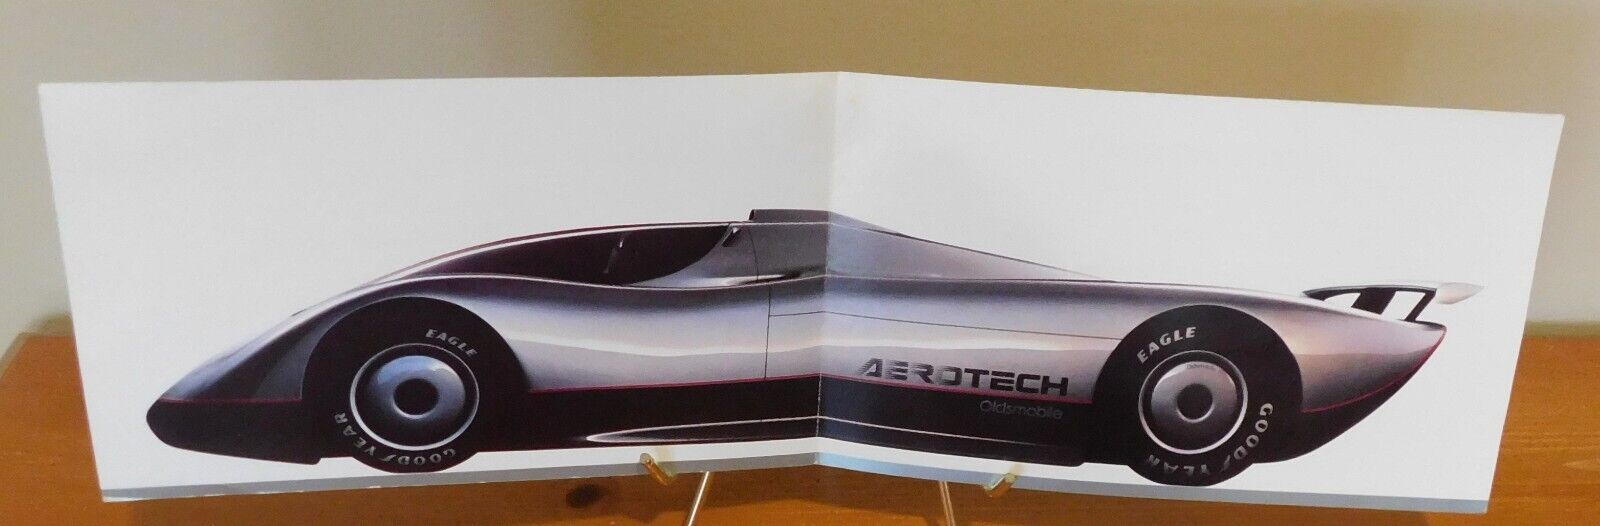 Oldsmobile Aerotech Concept Car Show Folder